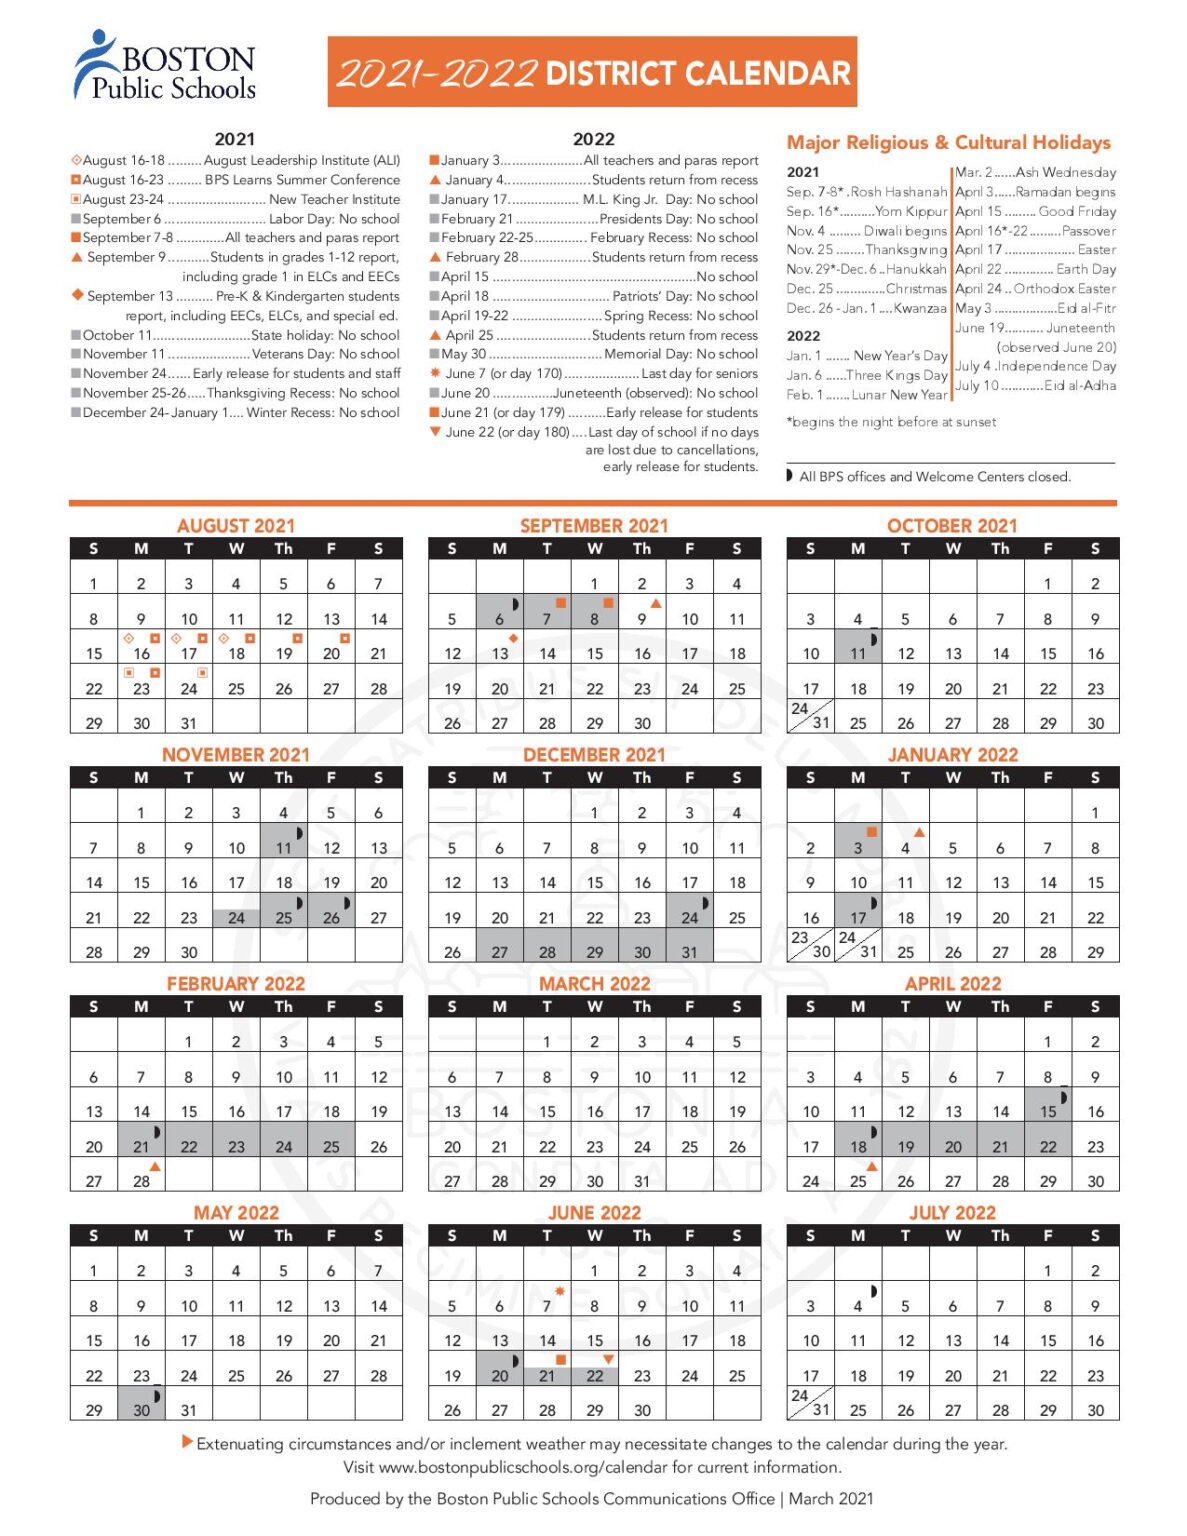 Boston Public Schools Calendar 2021 2022 in PDF